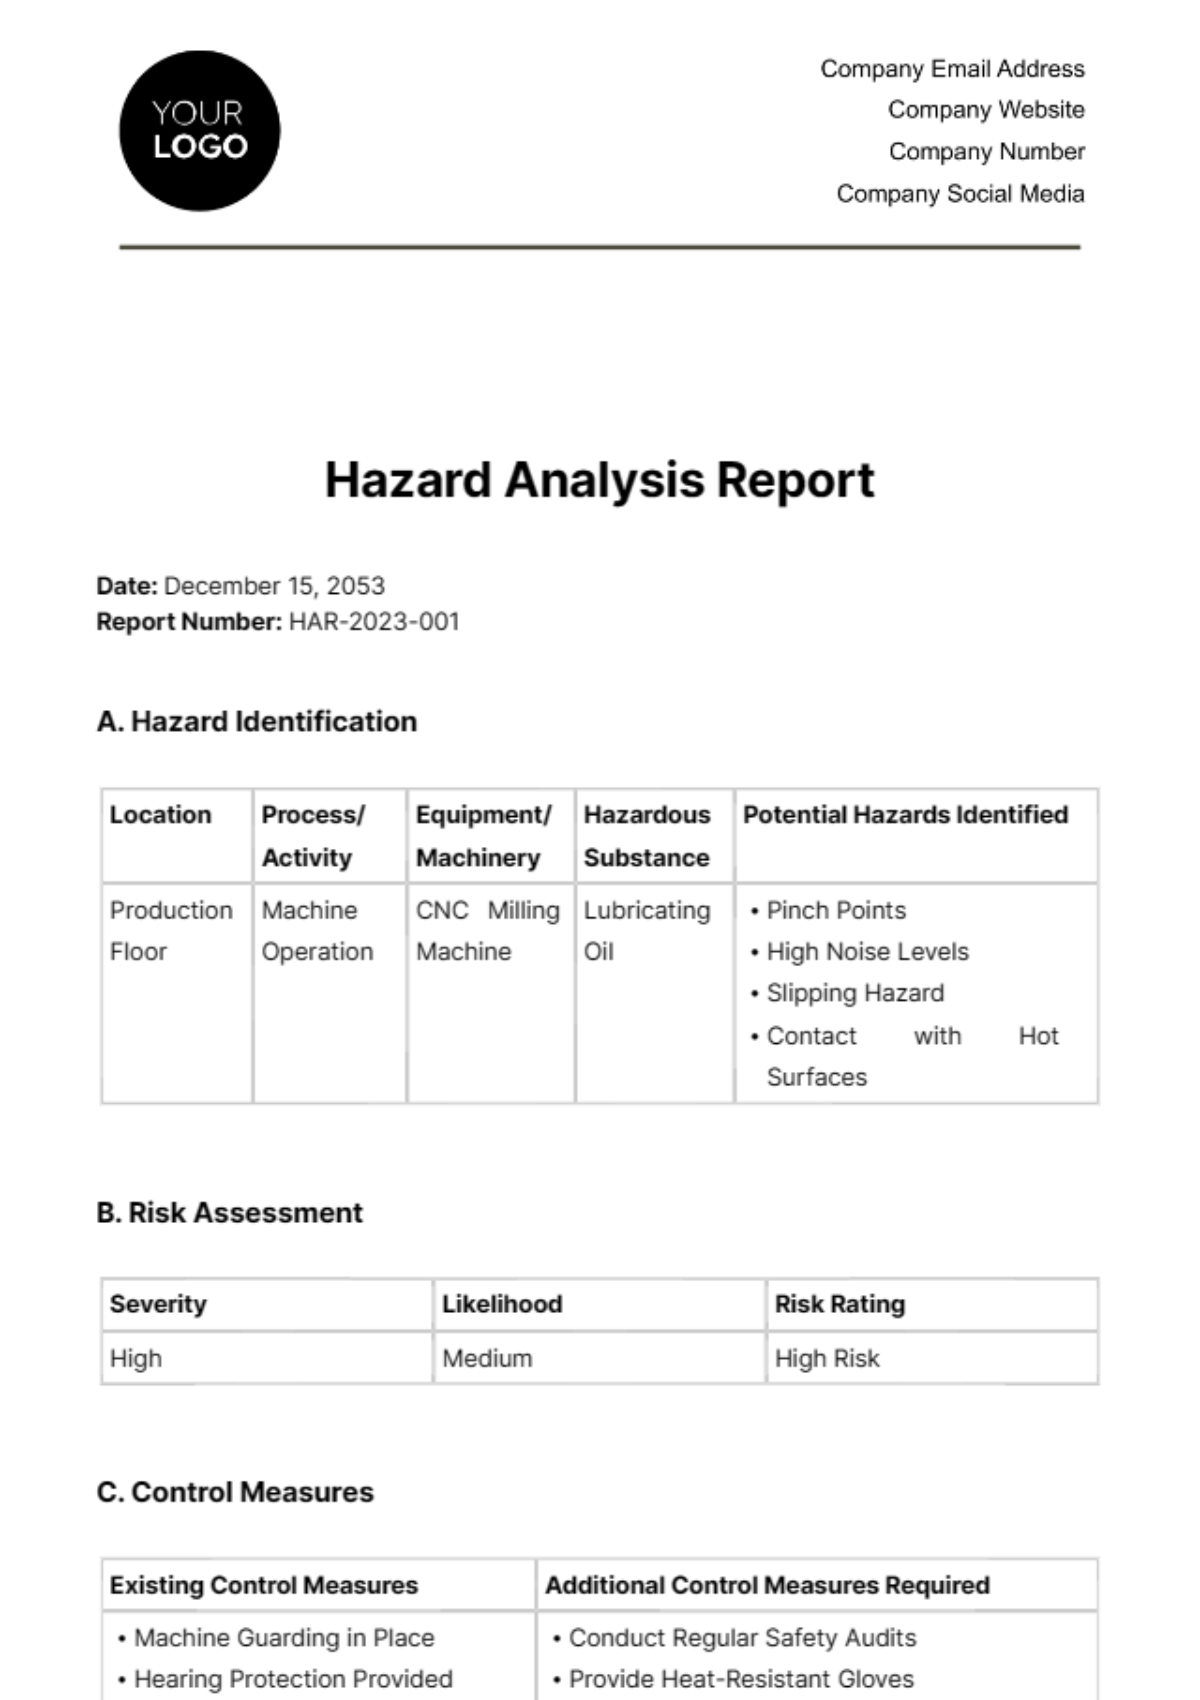 Free Hazard Analysis Report Template